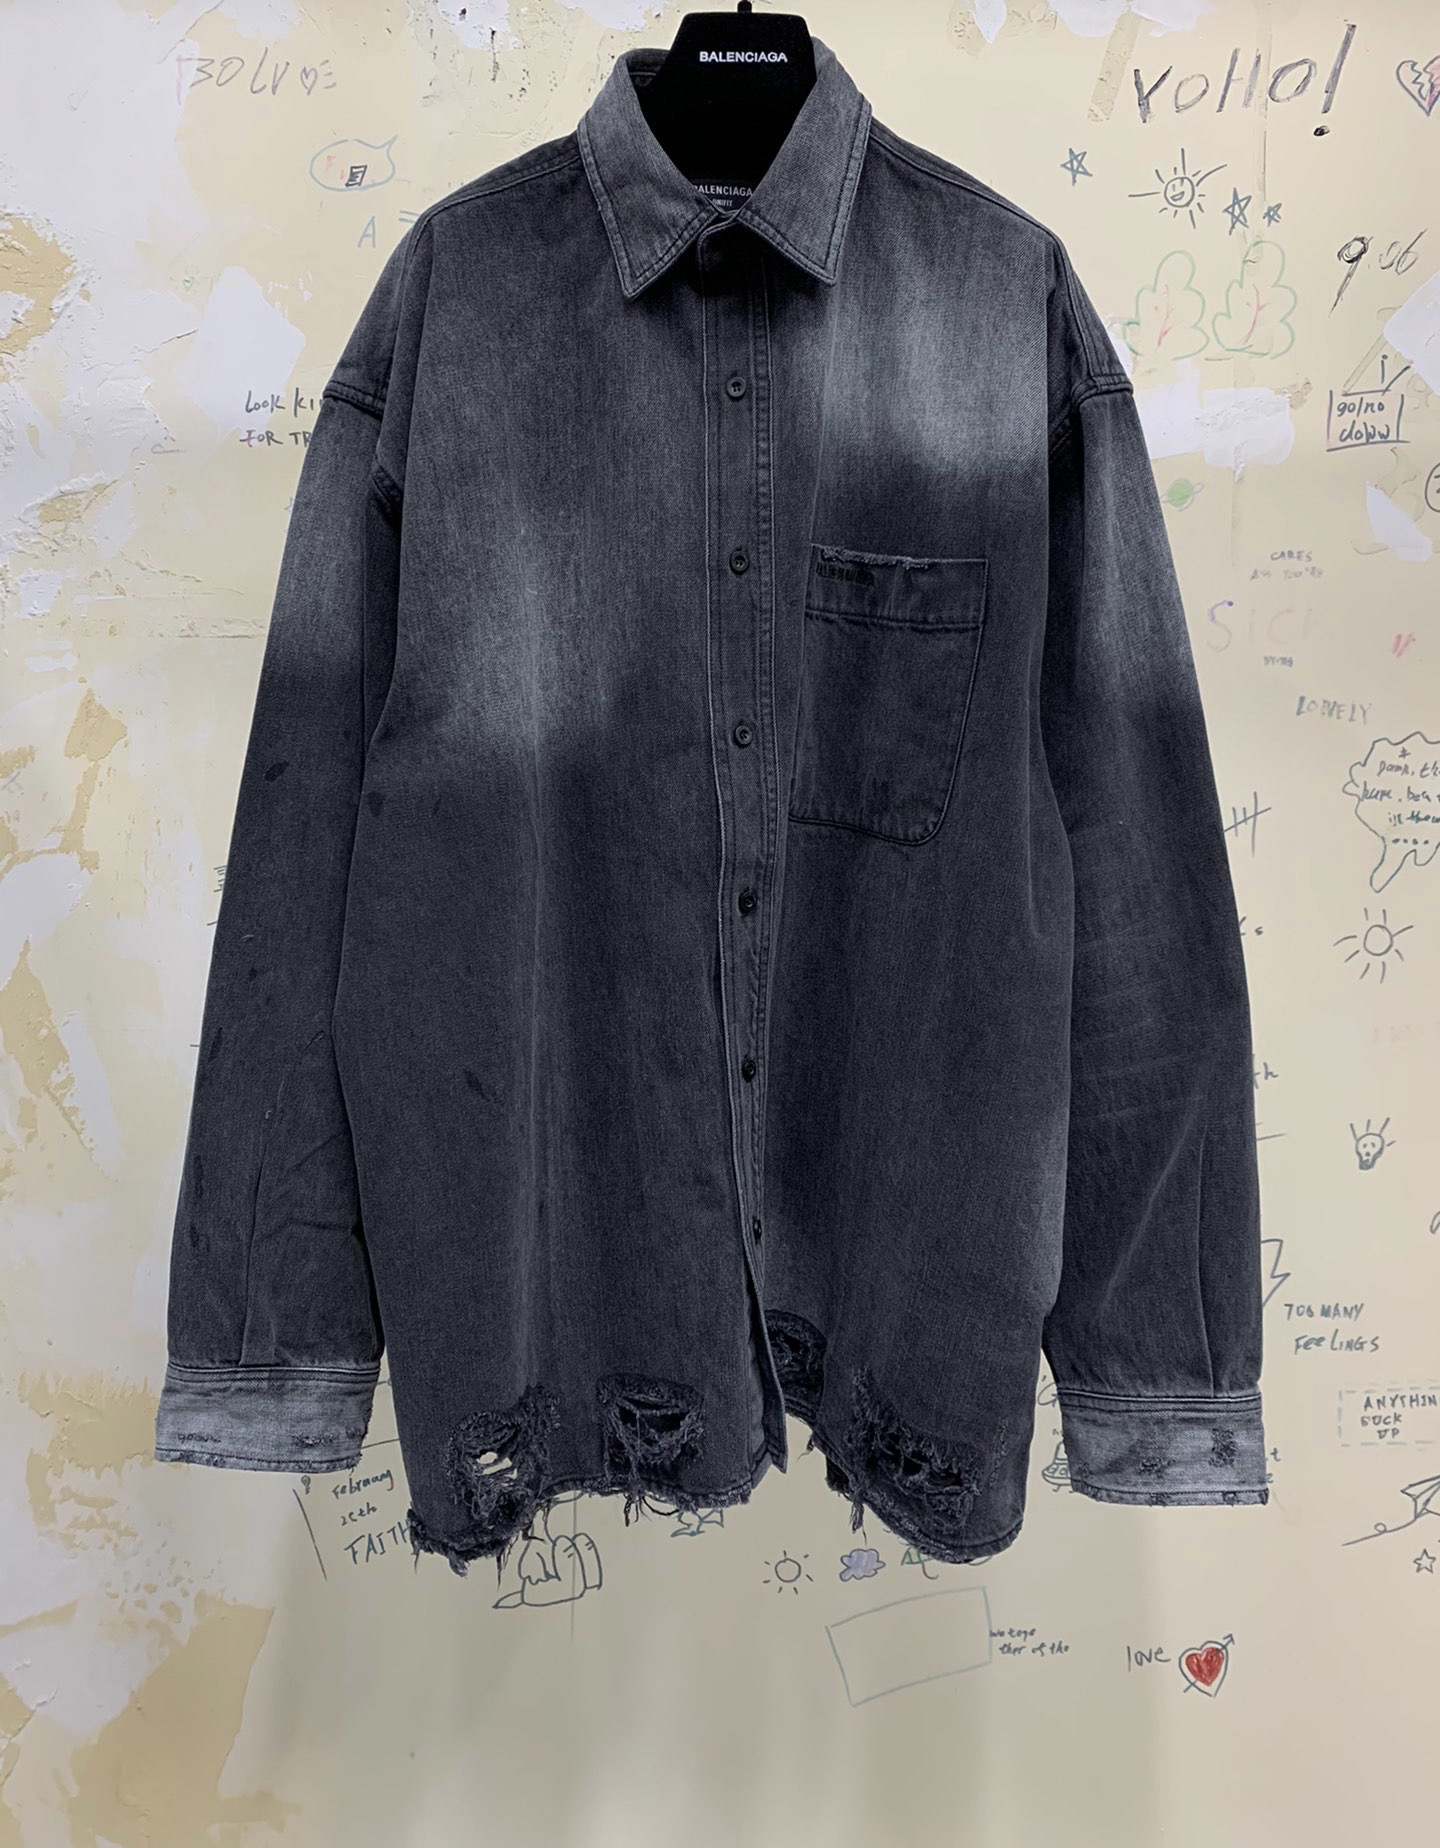 Balenciaga Ripped Shirt in stonewashed black denim – billionairemart